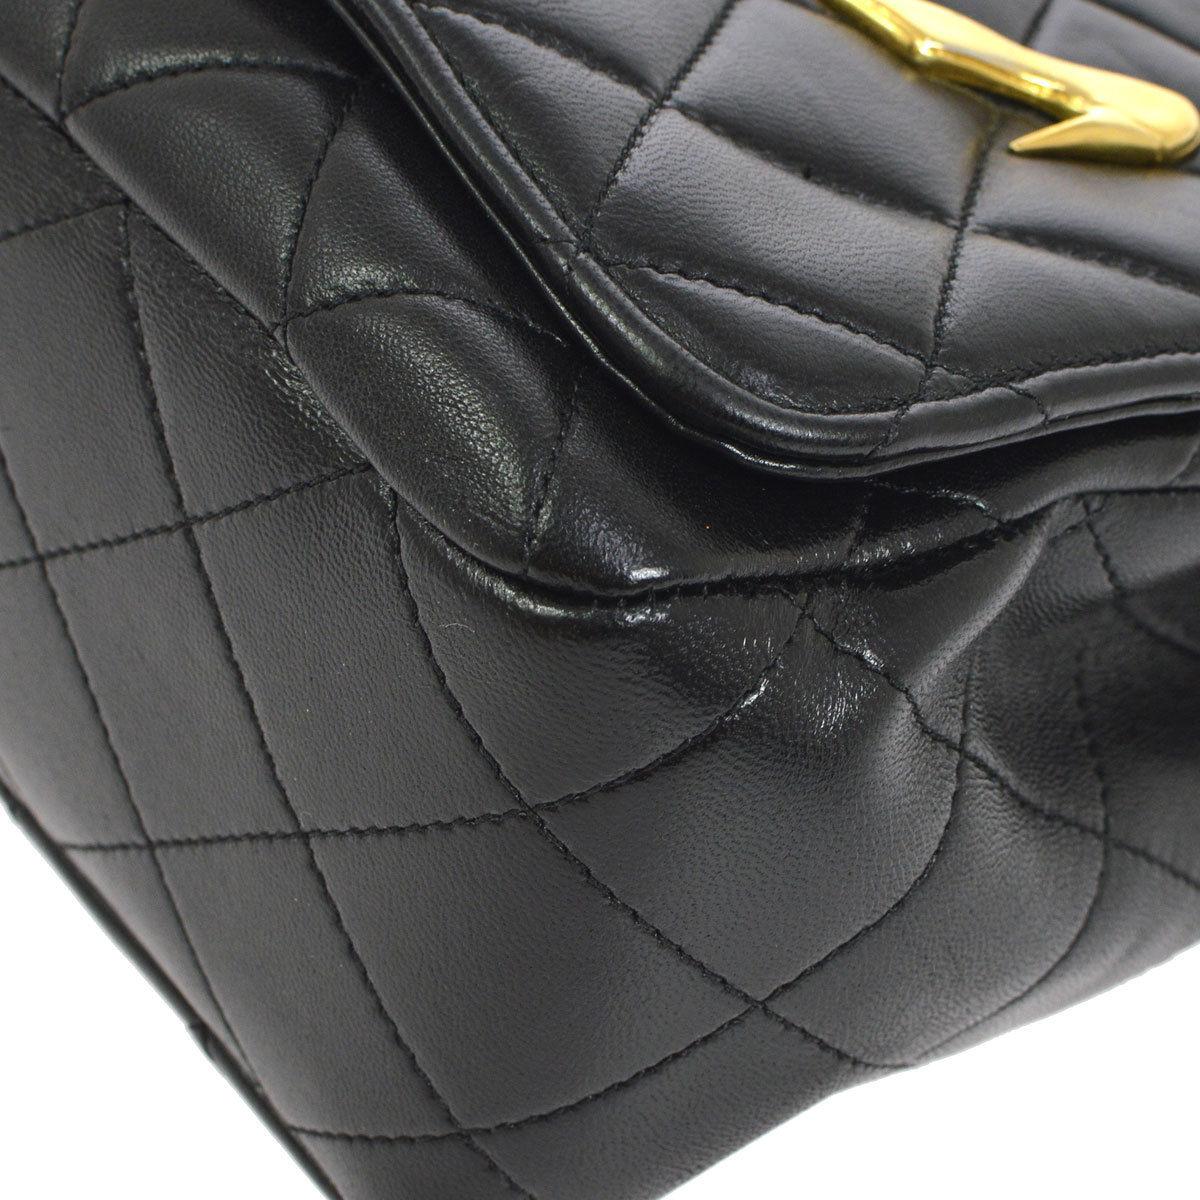 Chanel Rare Large Black Leather Gold Charms Evening Shoulder Flap Bag 1